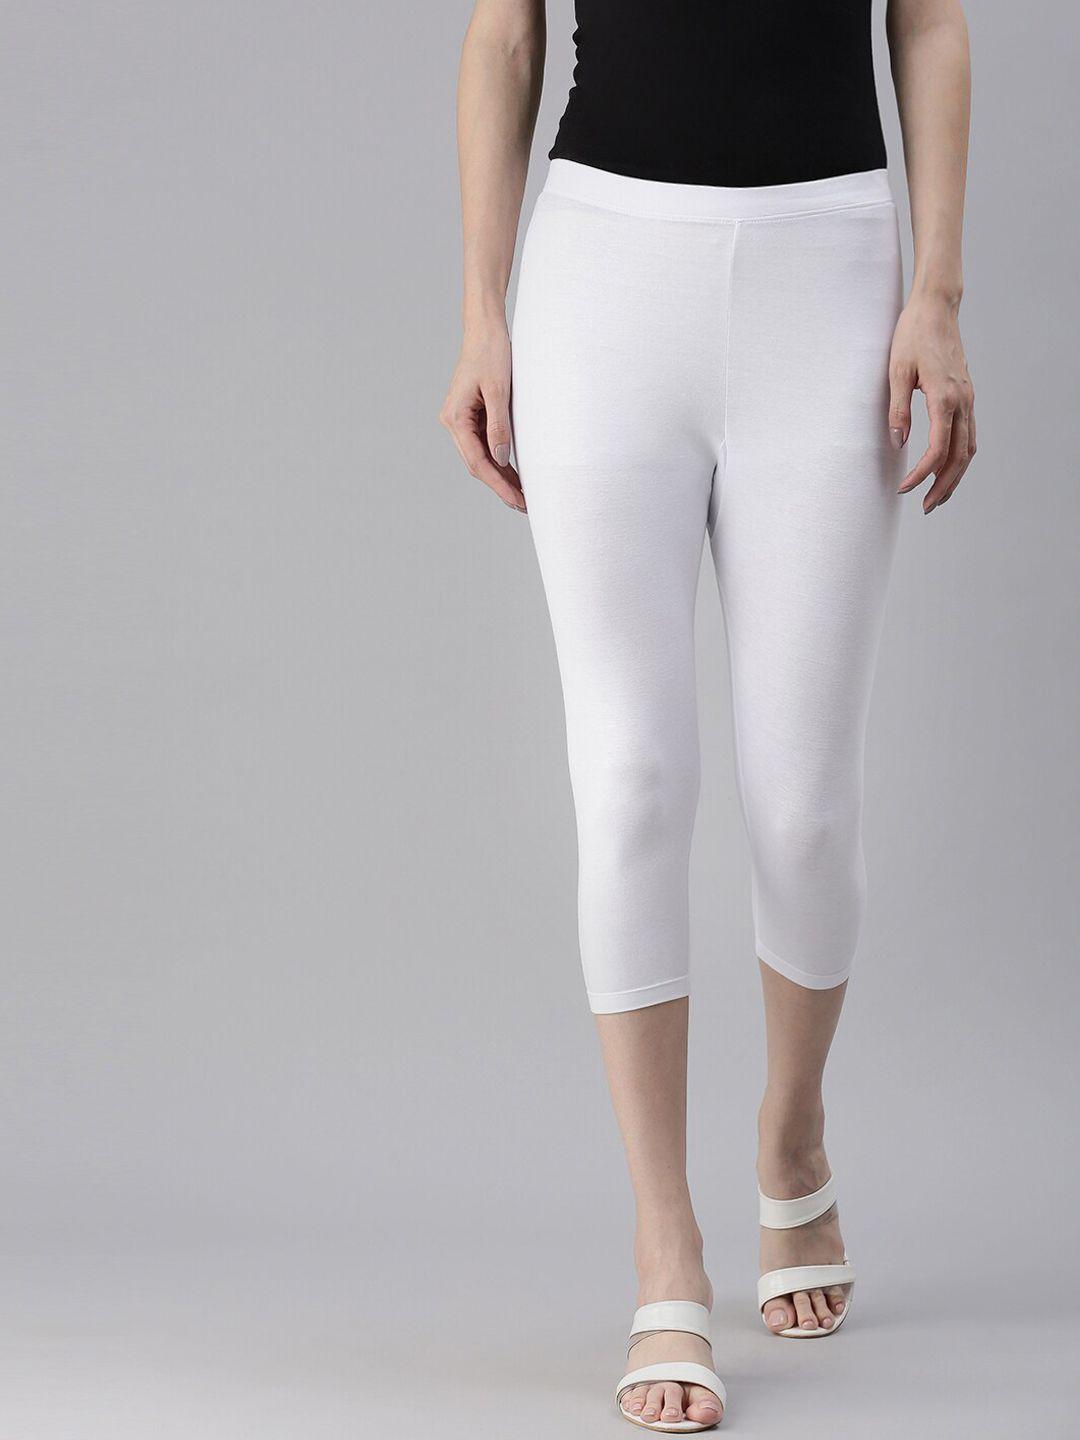 kryptic-women-white-solid-three-fourth-length-slim-fit-legging